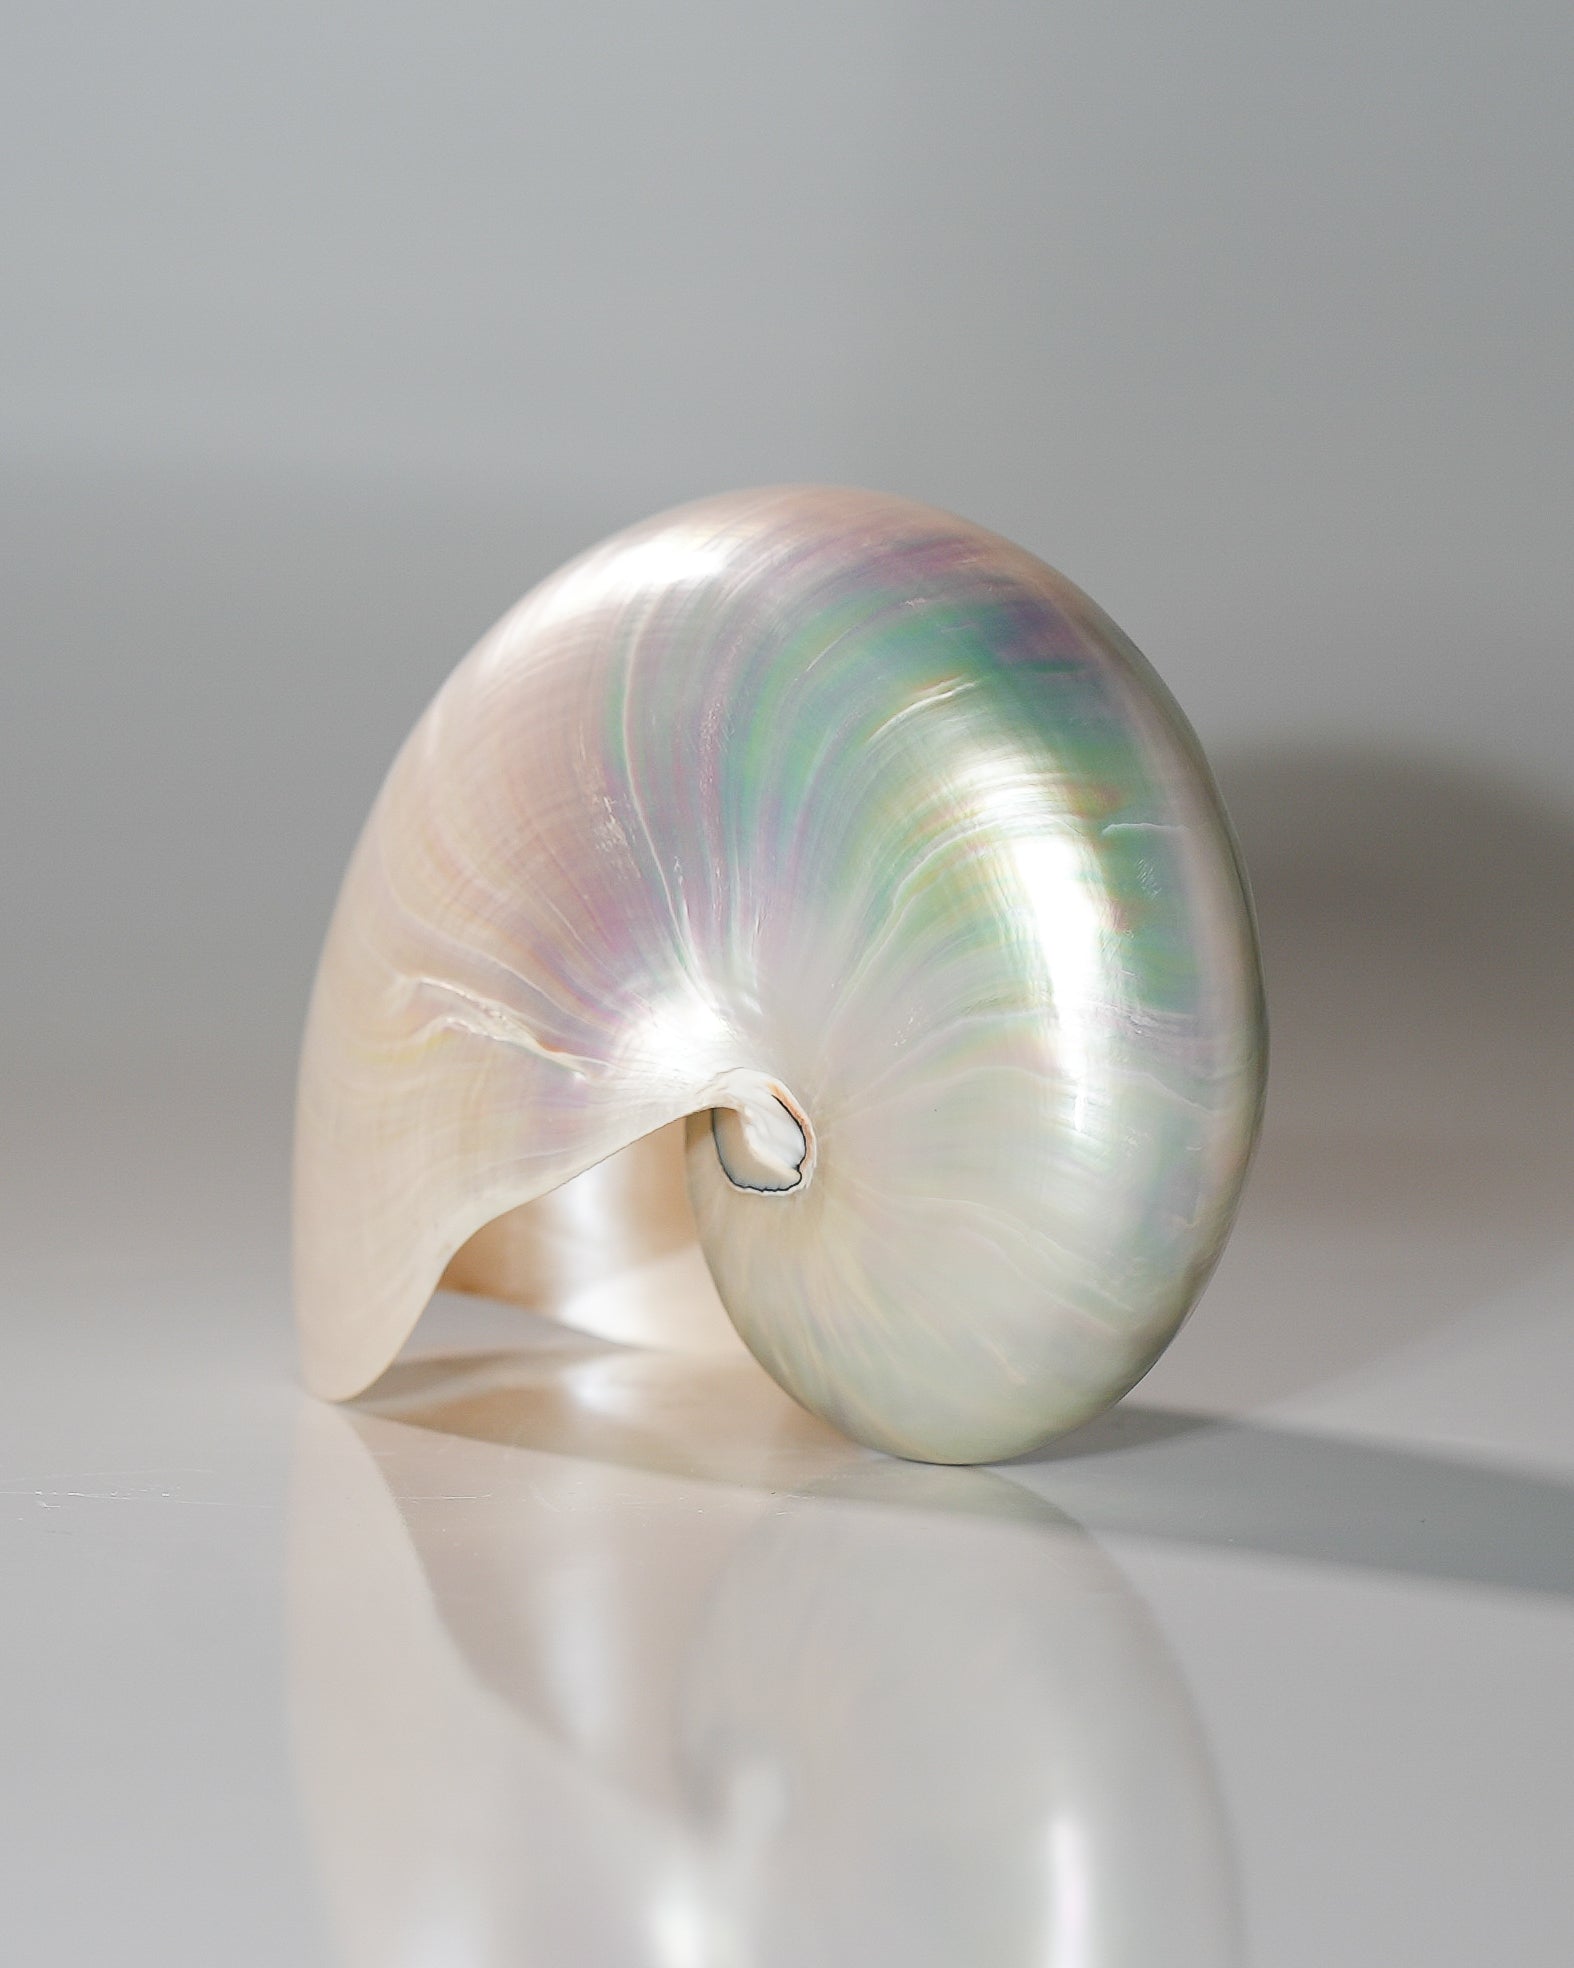 Pearlized Nautilus Pompilius Shell